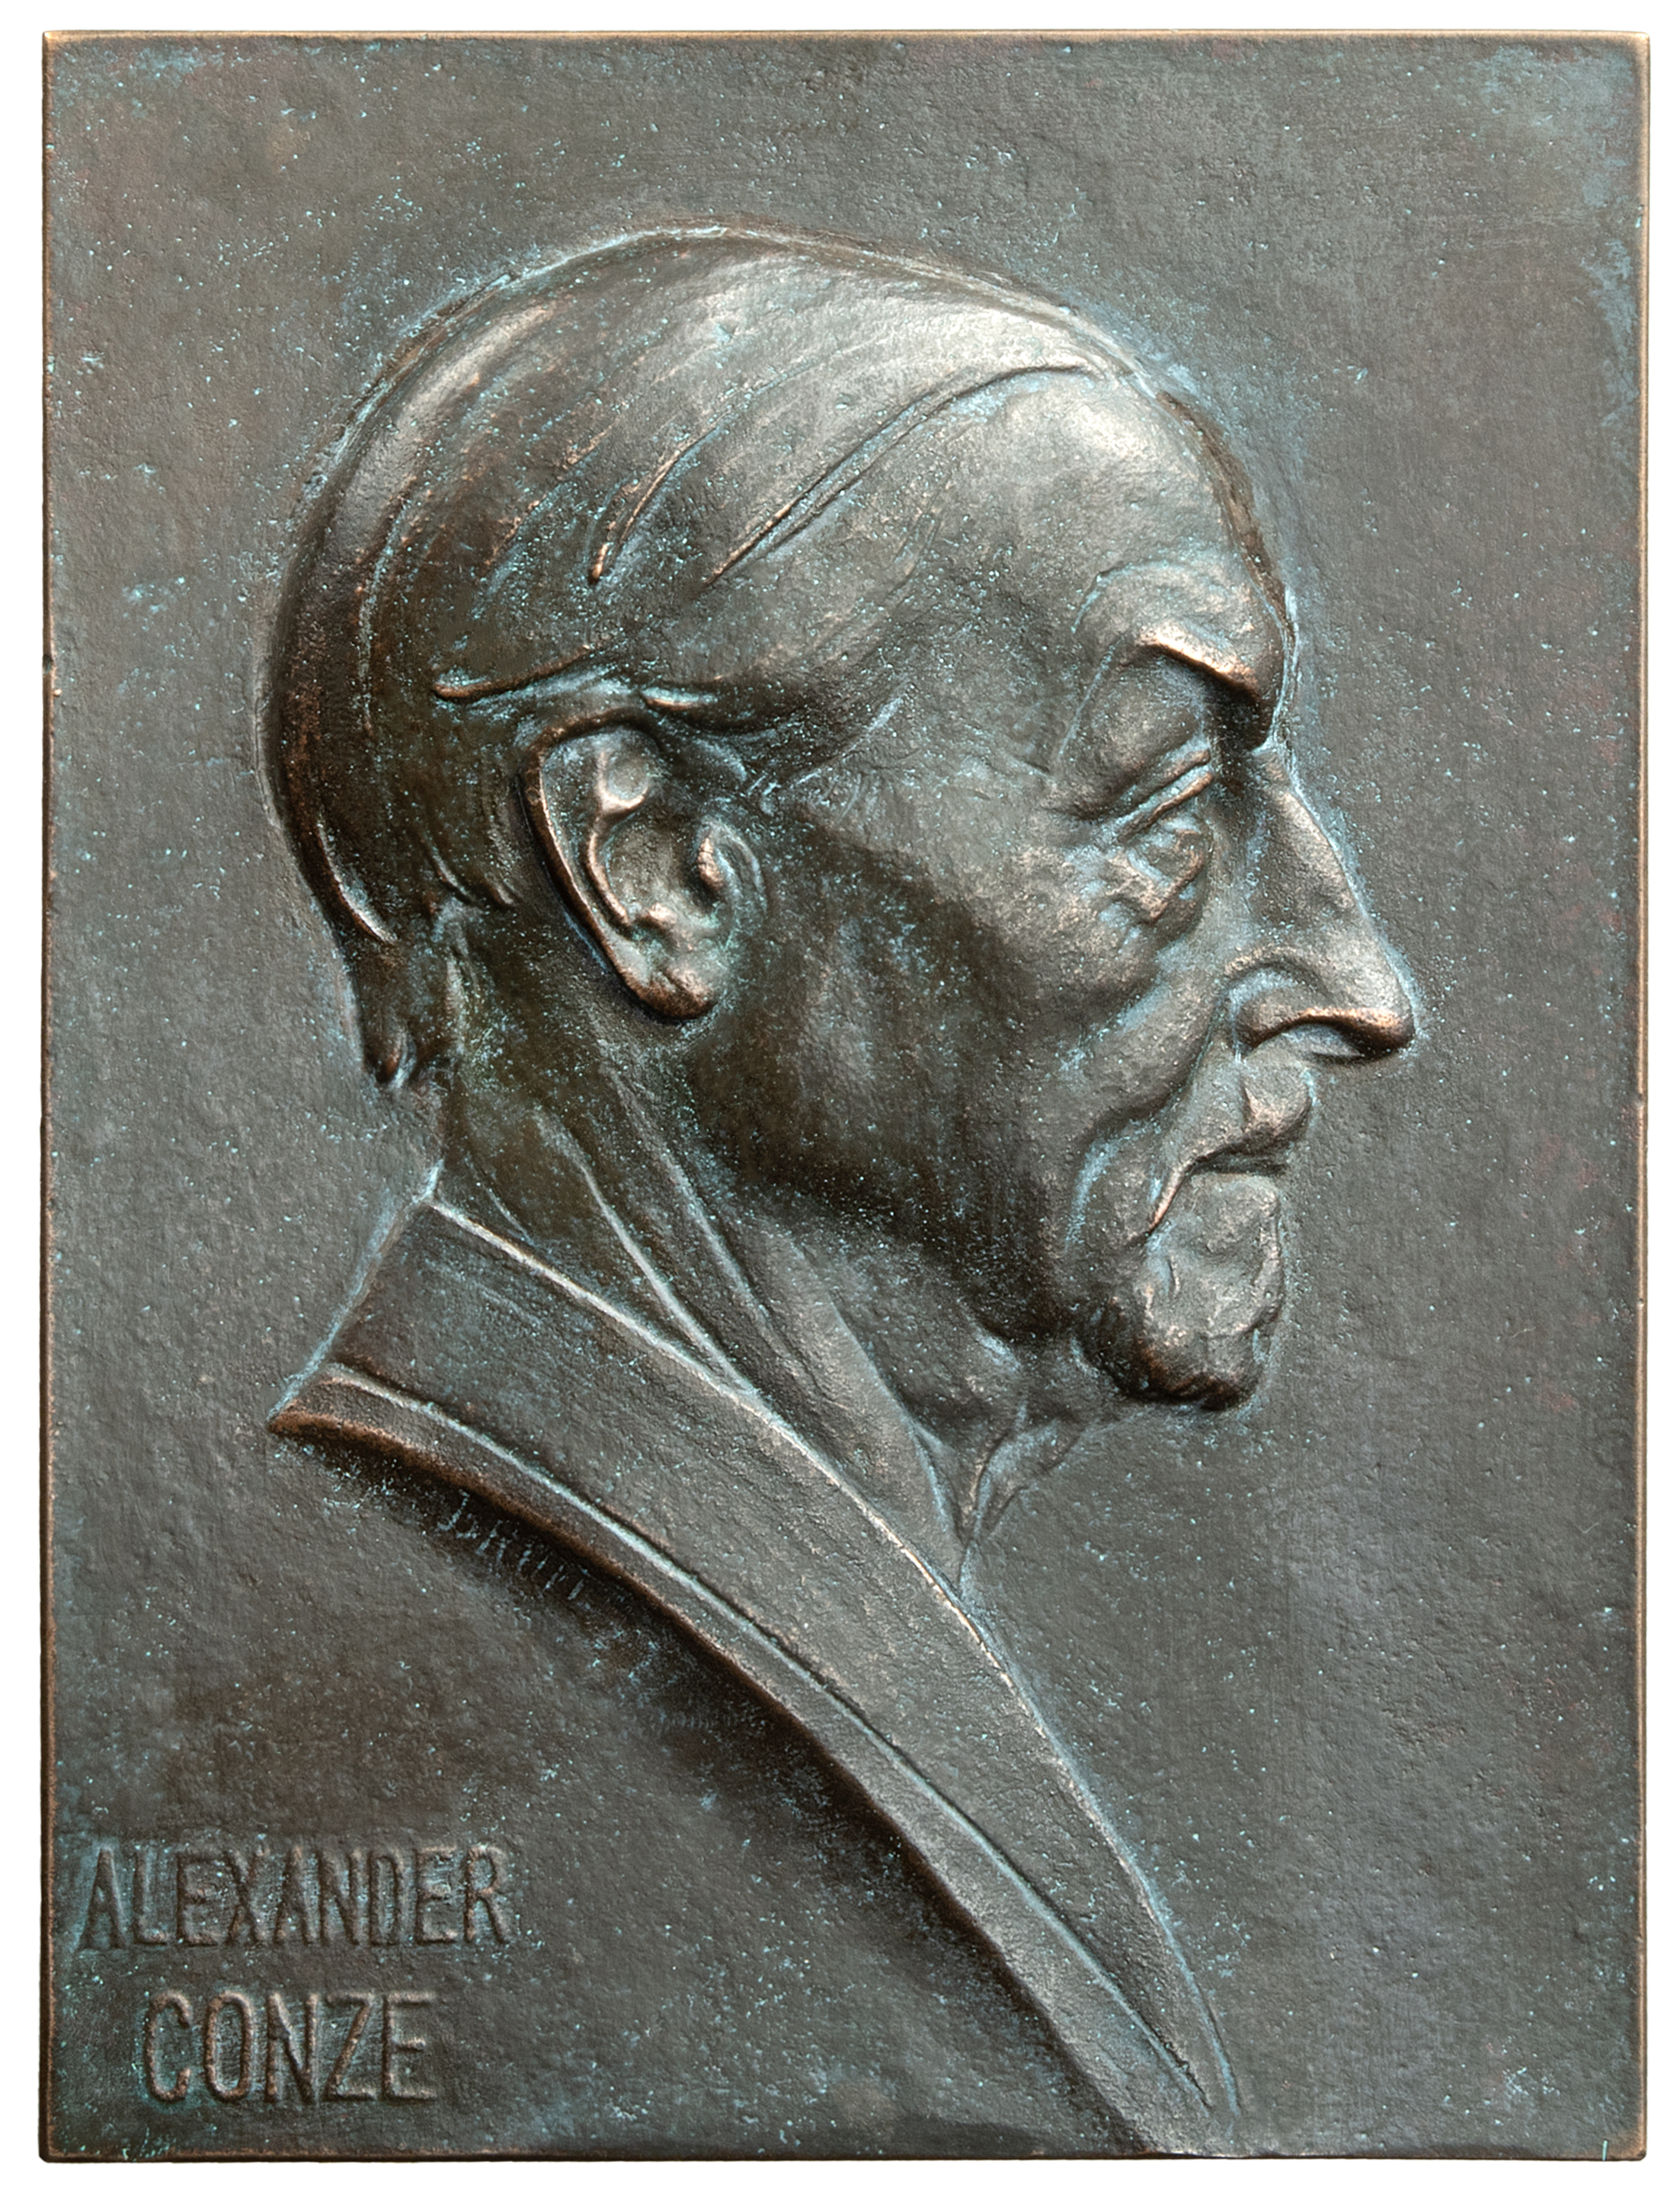 Brütt, Adolf: Alexander Conze